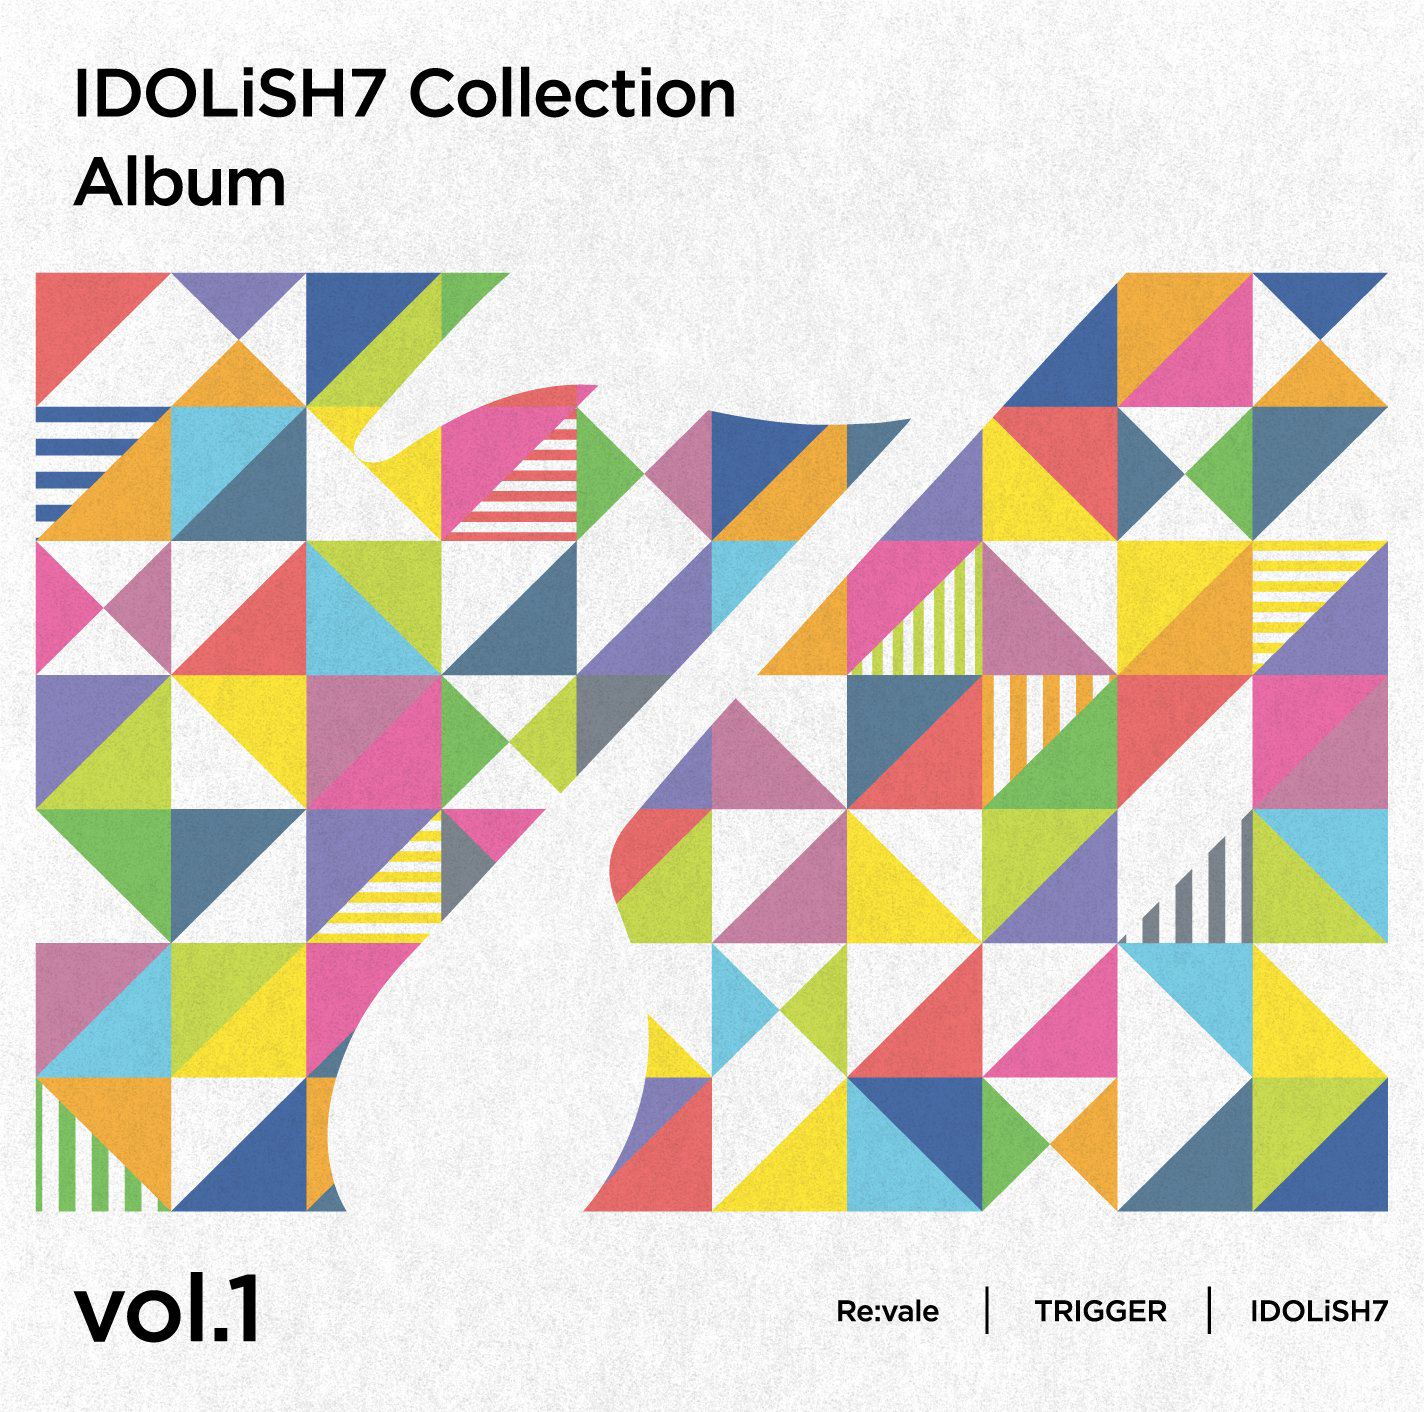 Collection Album The English Idolish7 Wiki Fandom